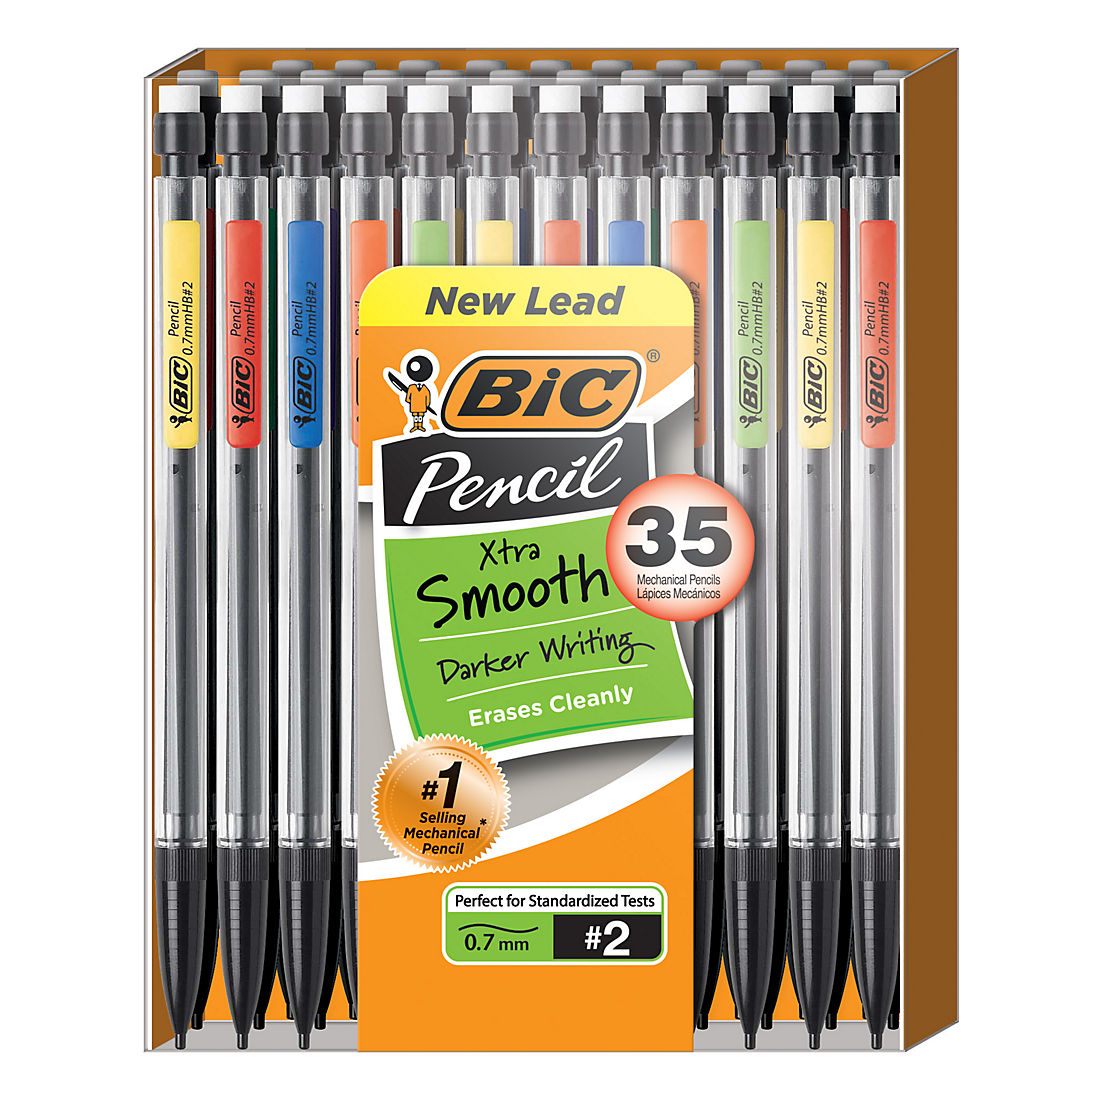 2 Mechanical Pencils 0.7mm Assorted Colors 24 Count for sale online Pen Gear No